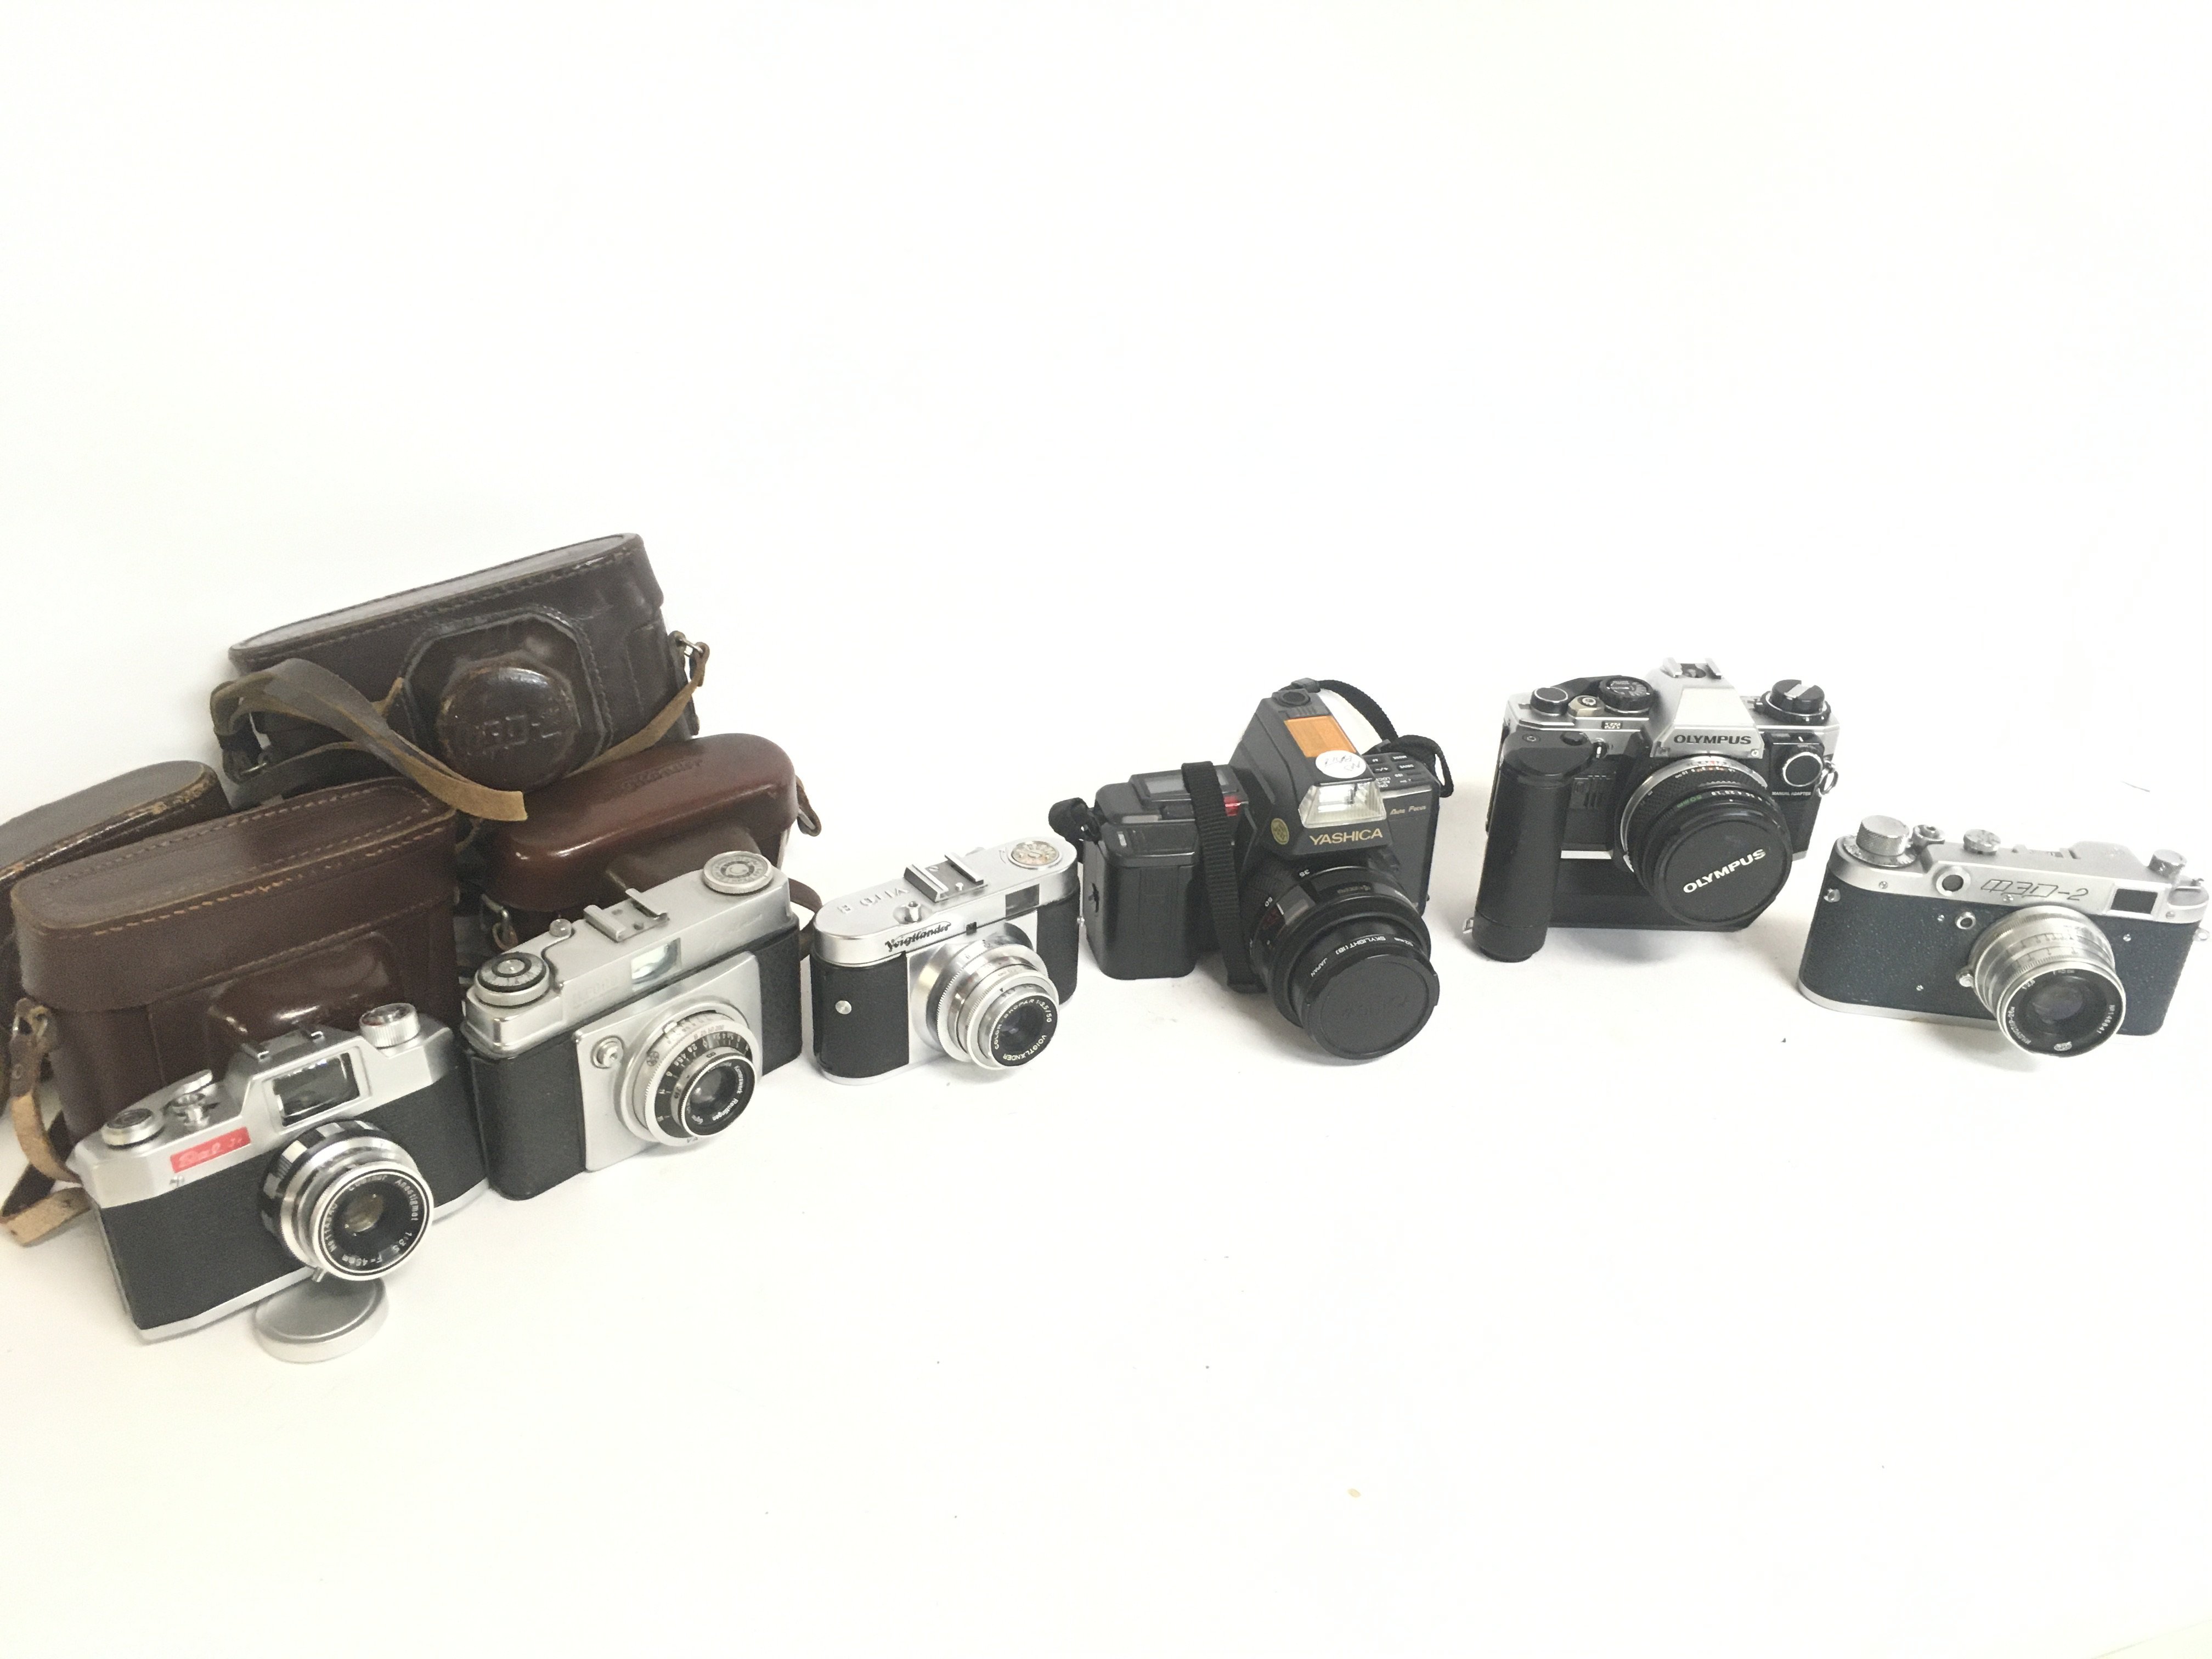 Vintage cameras including a VoigtlÃ¤nder Vito B, D